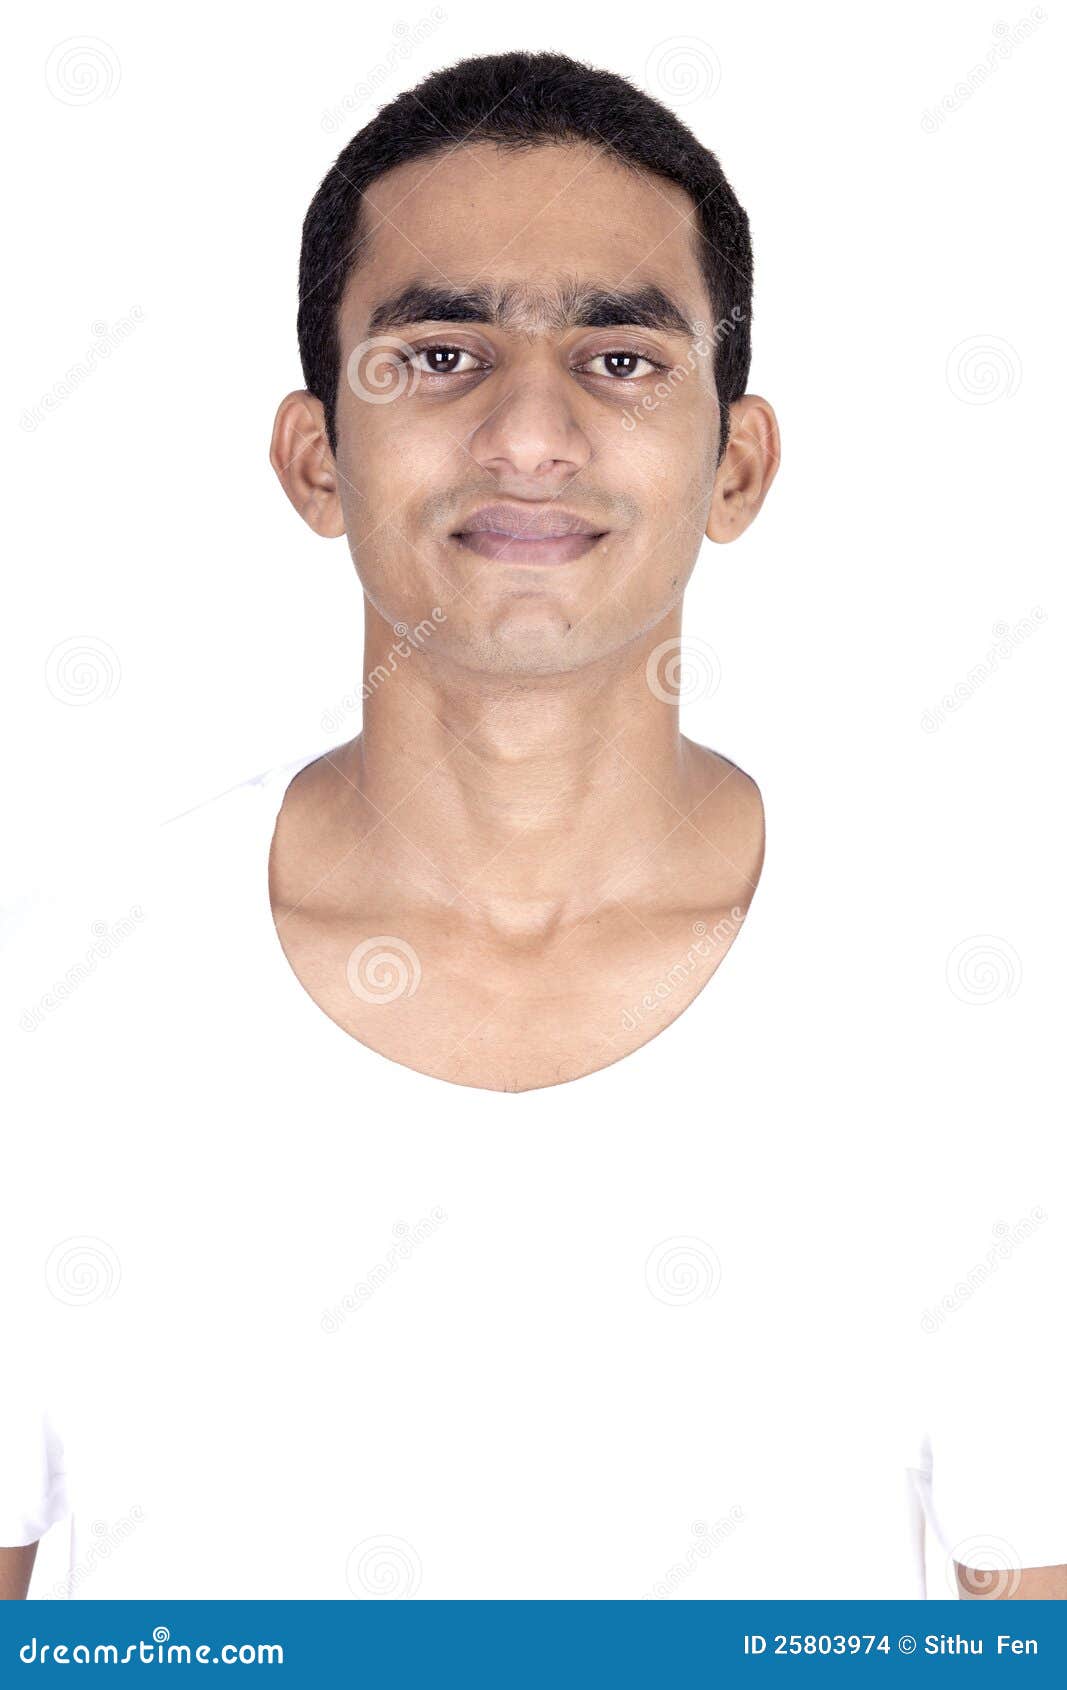 Srilankan Boy On white background - srilankan-boy-white-background-25803974